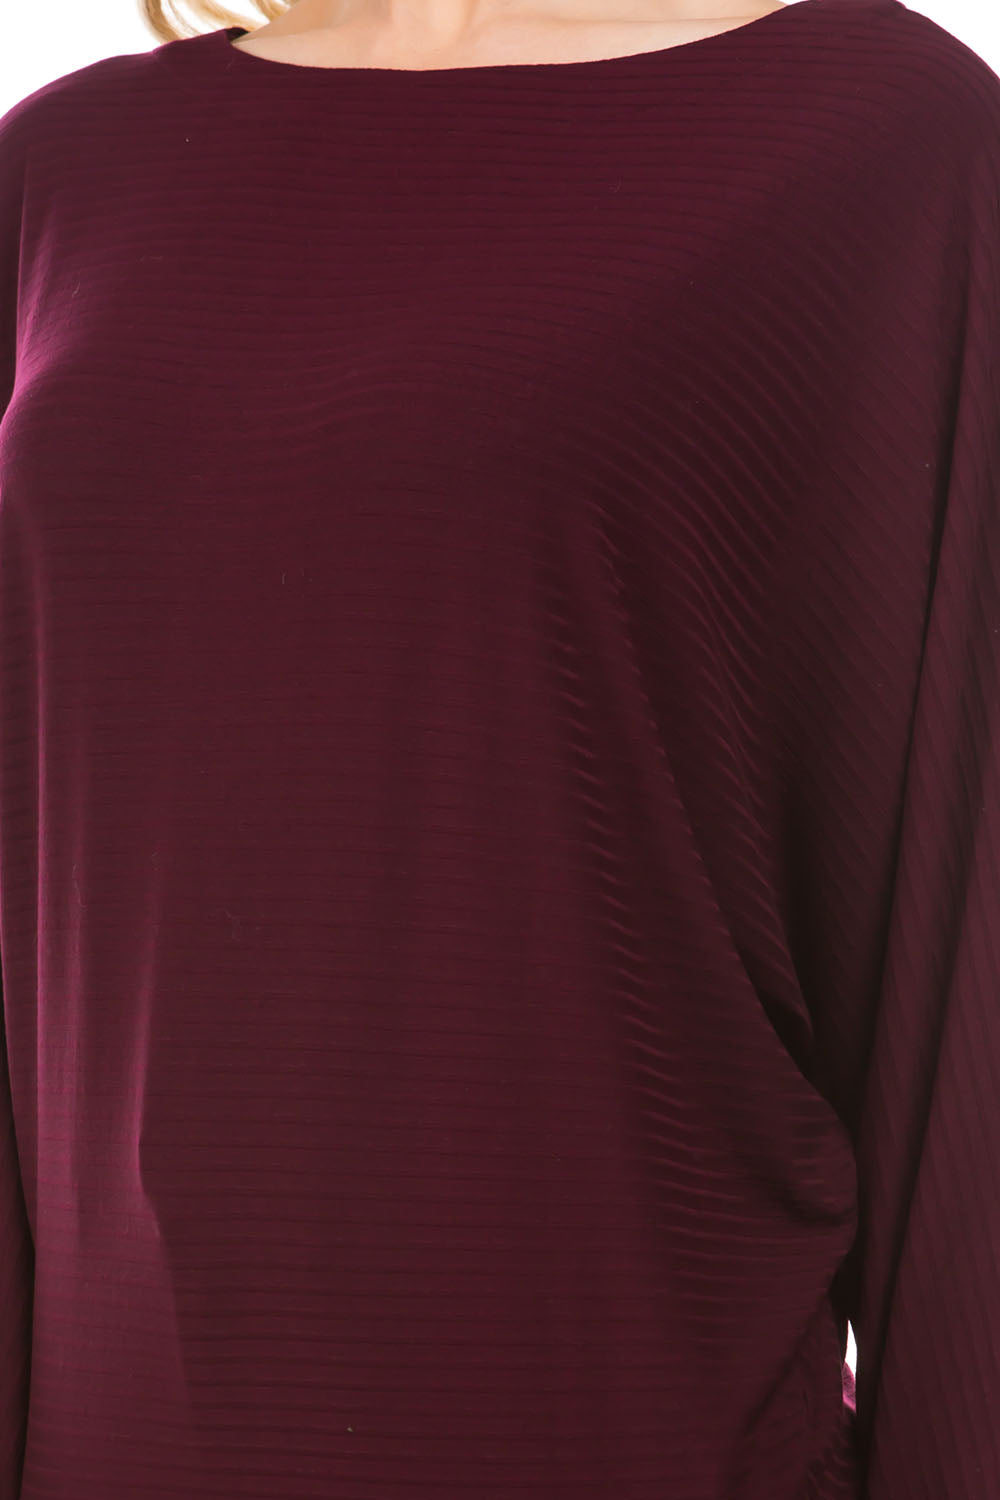 Dolman Long Sleeve Textured Stripe Top Maroon Neck APNY